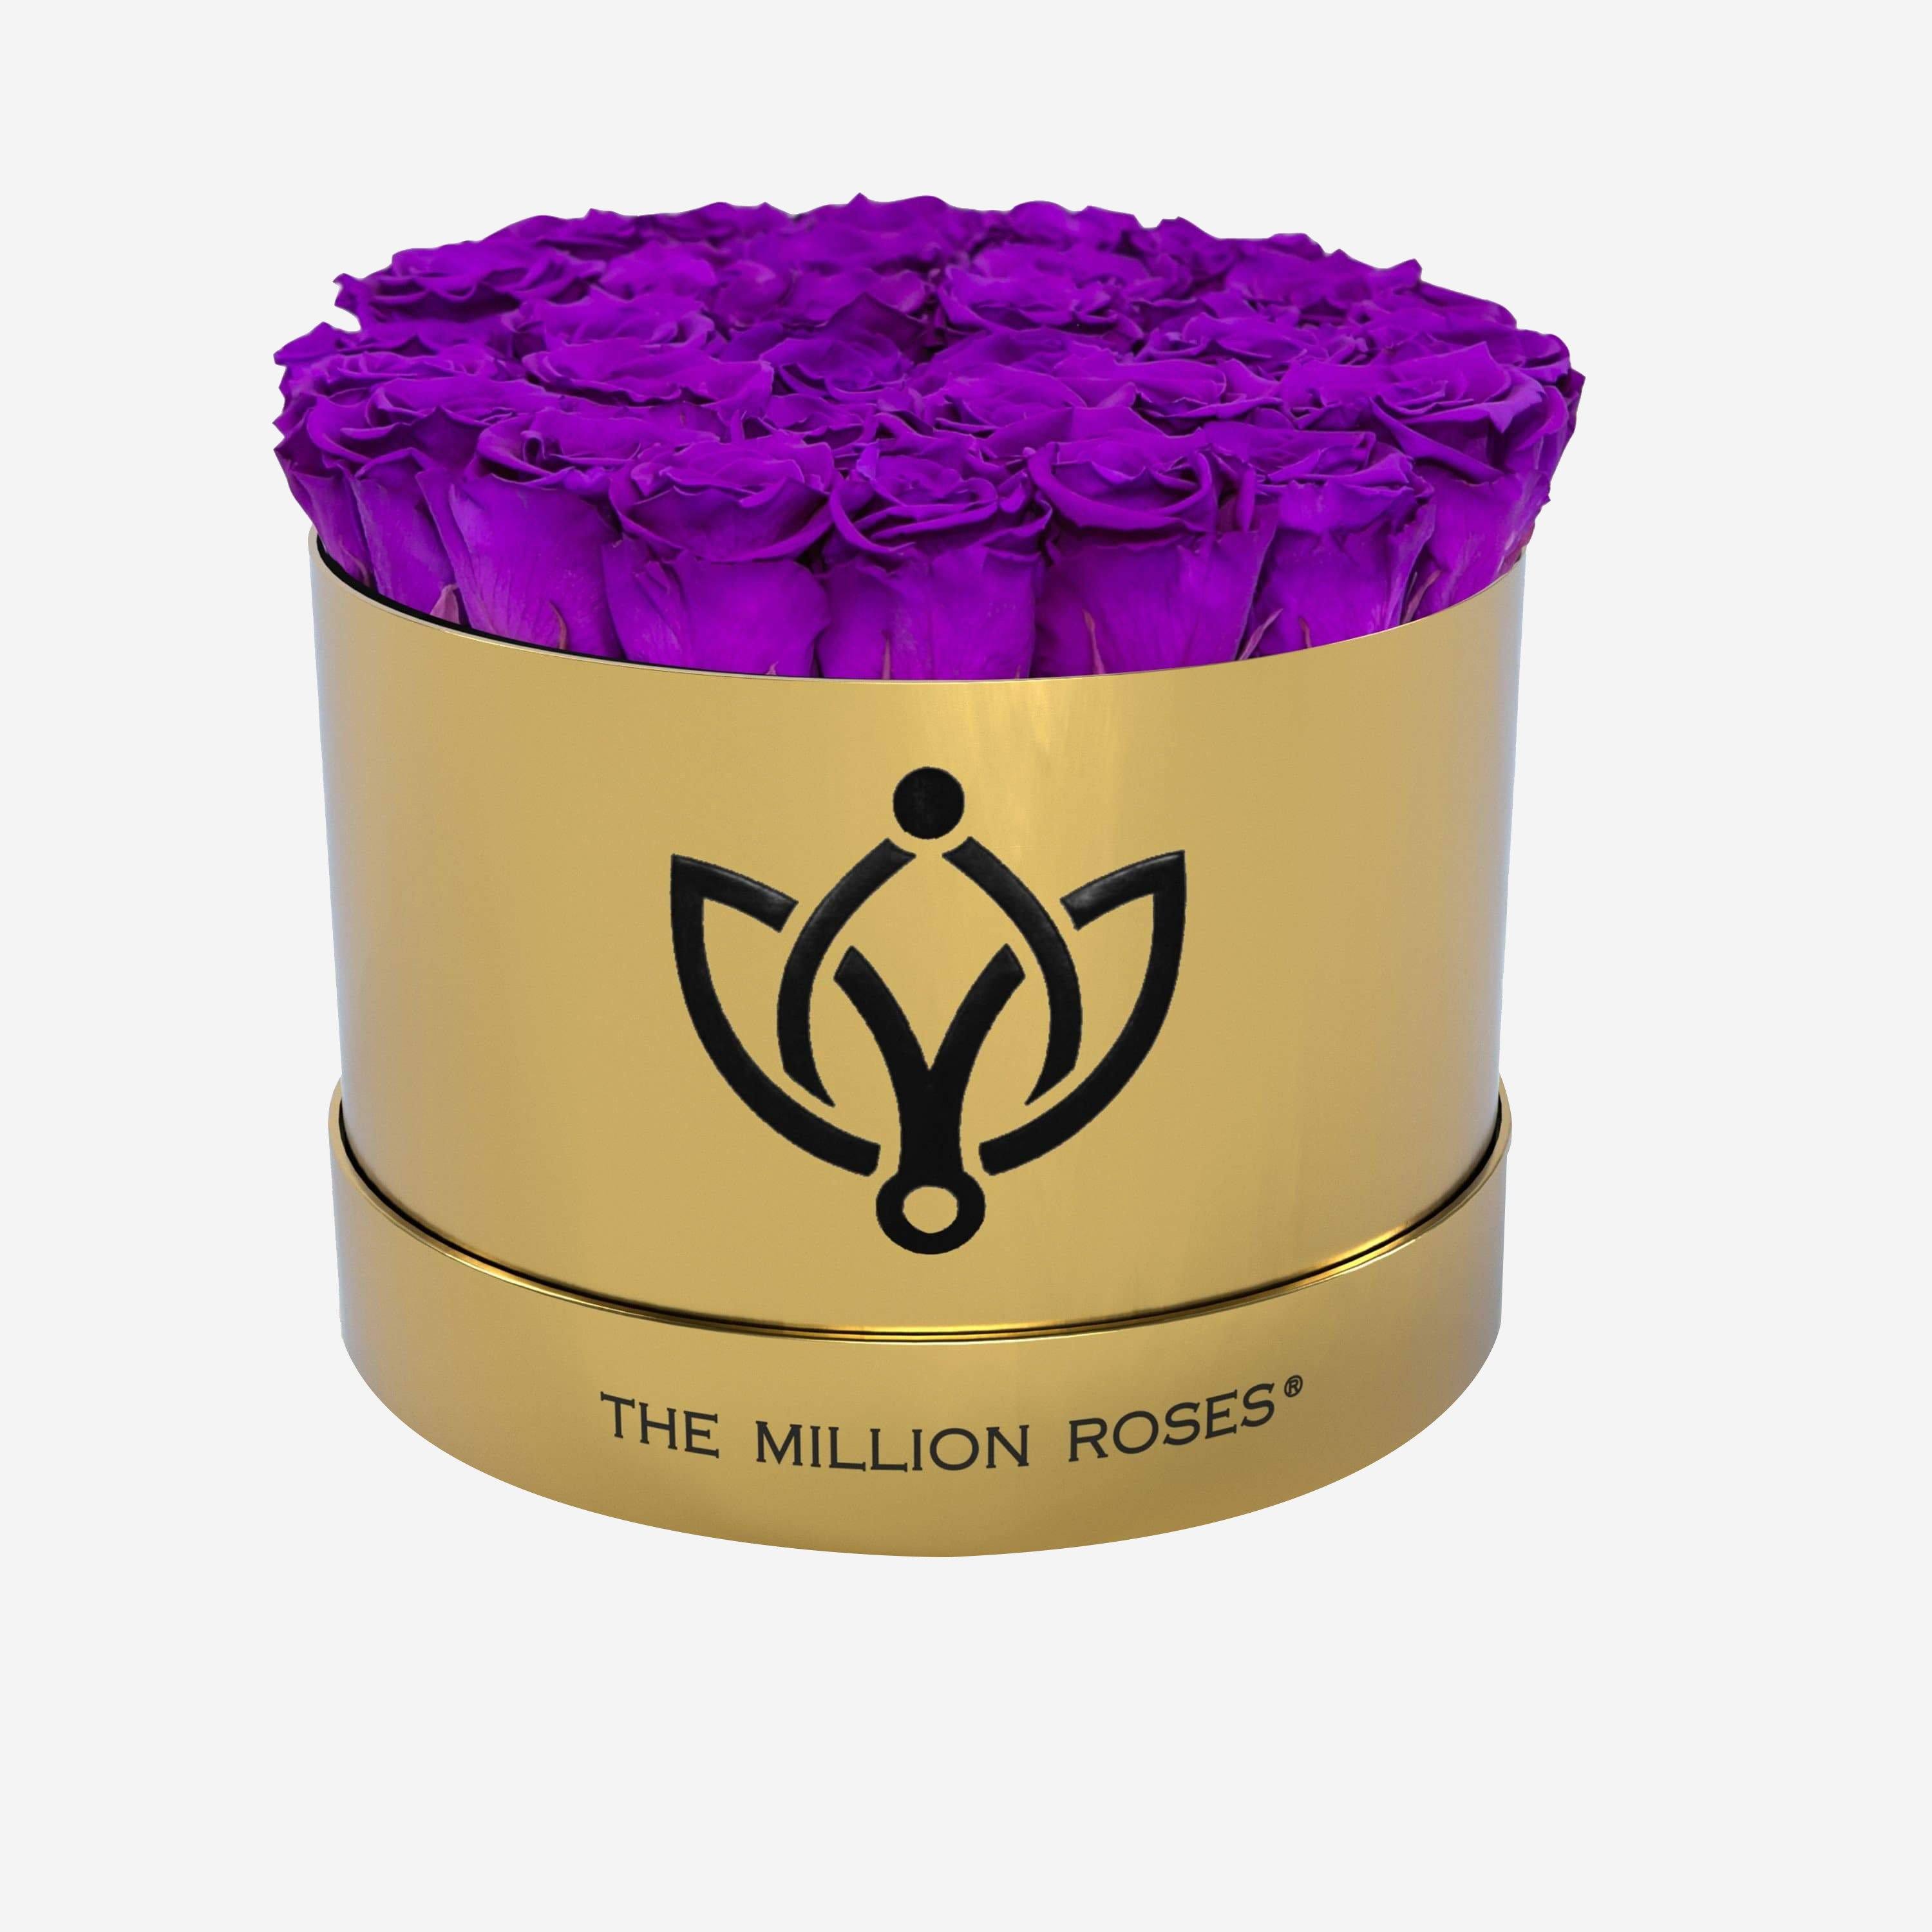 Supreme Mirror Gold Box | Bright Purple Roses - The Million Roses